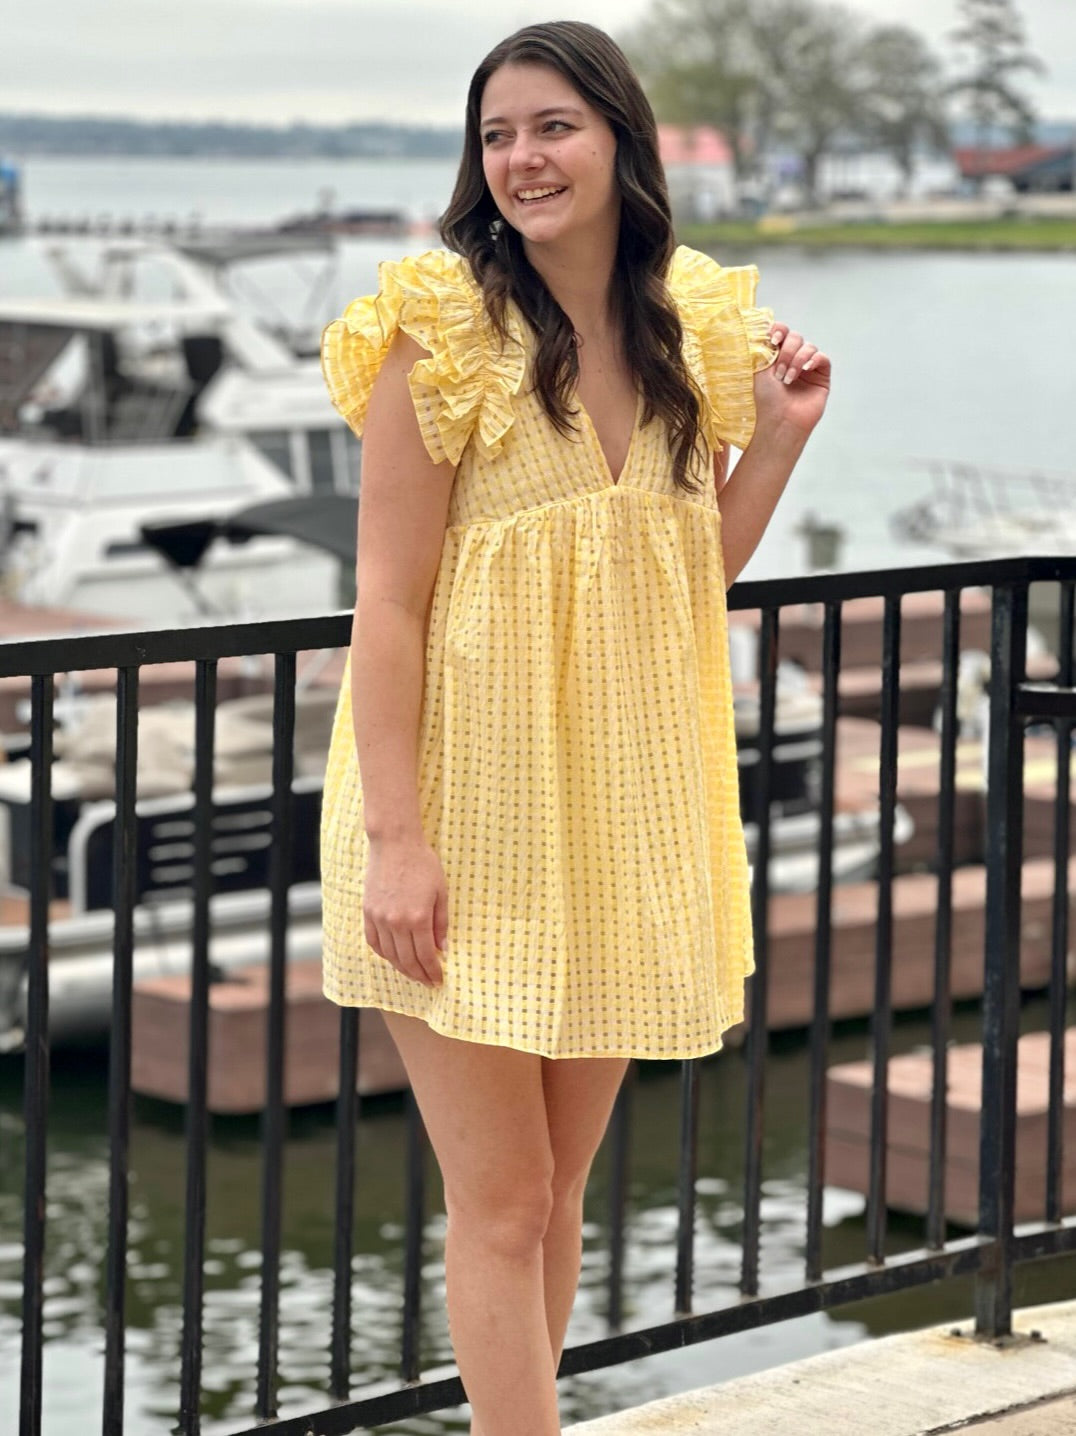 Megan in lemon dress looking to the side